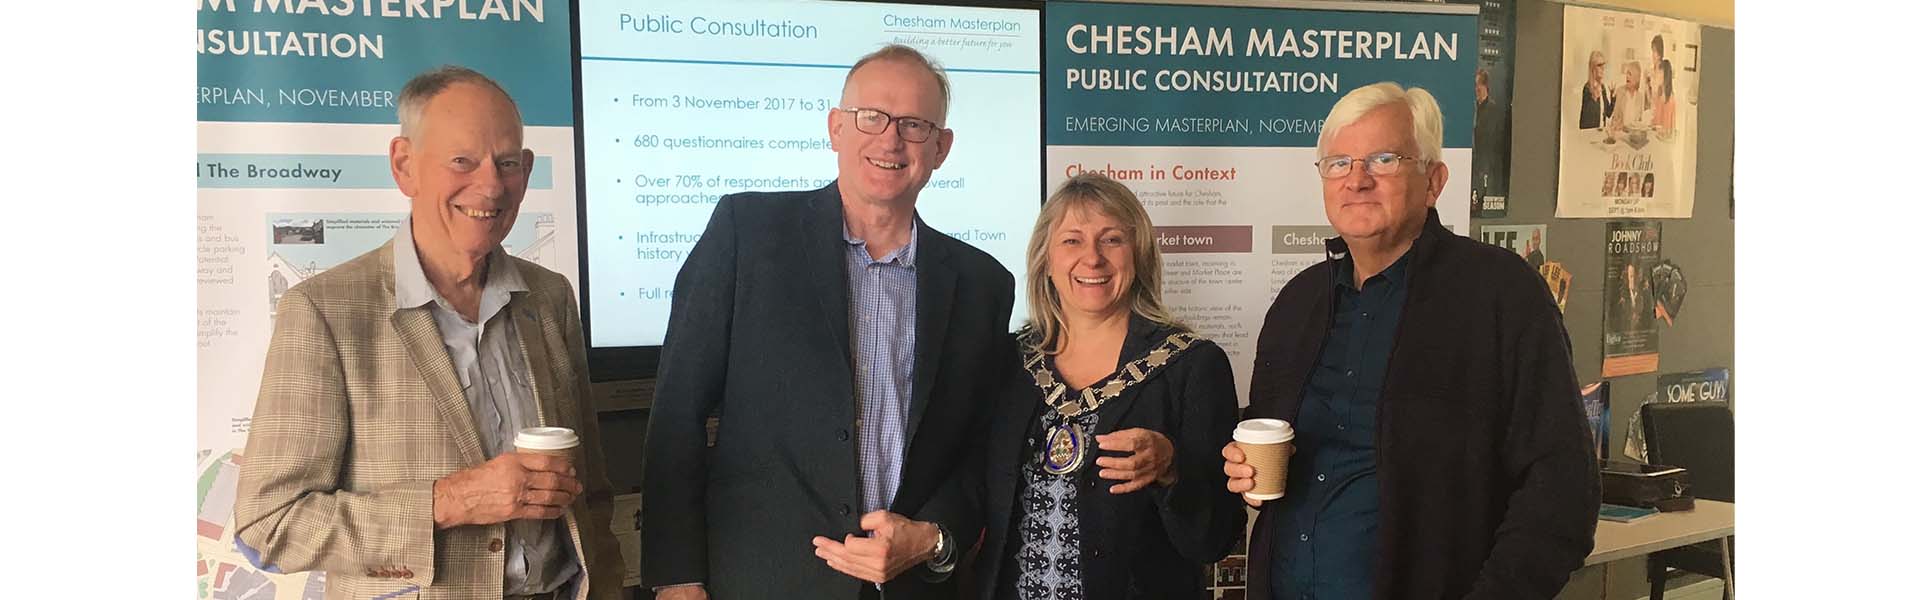 Chesham Masterplan public consultation event